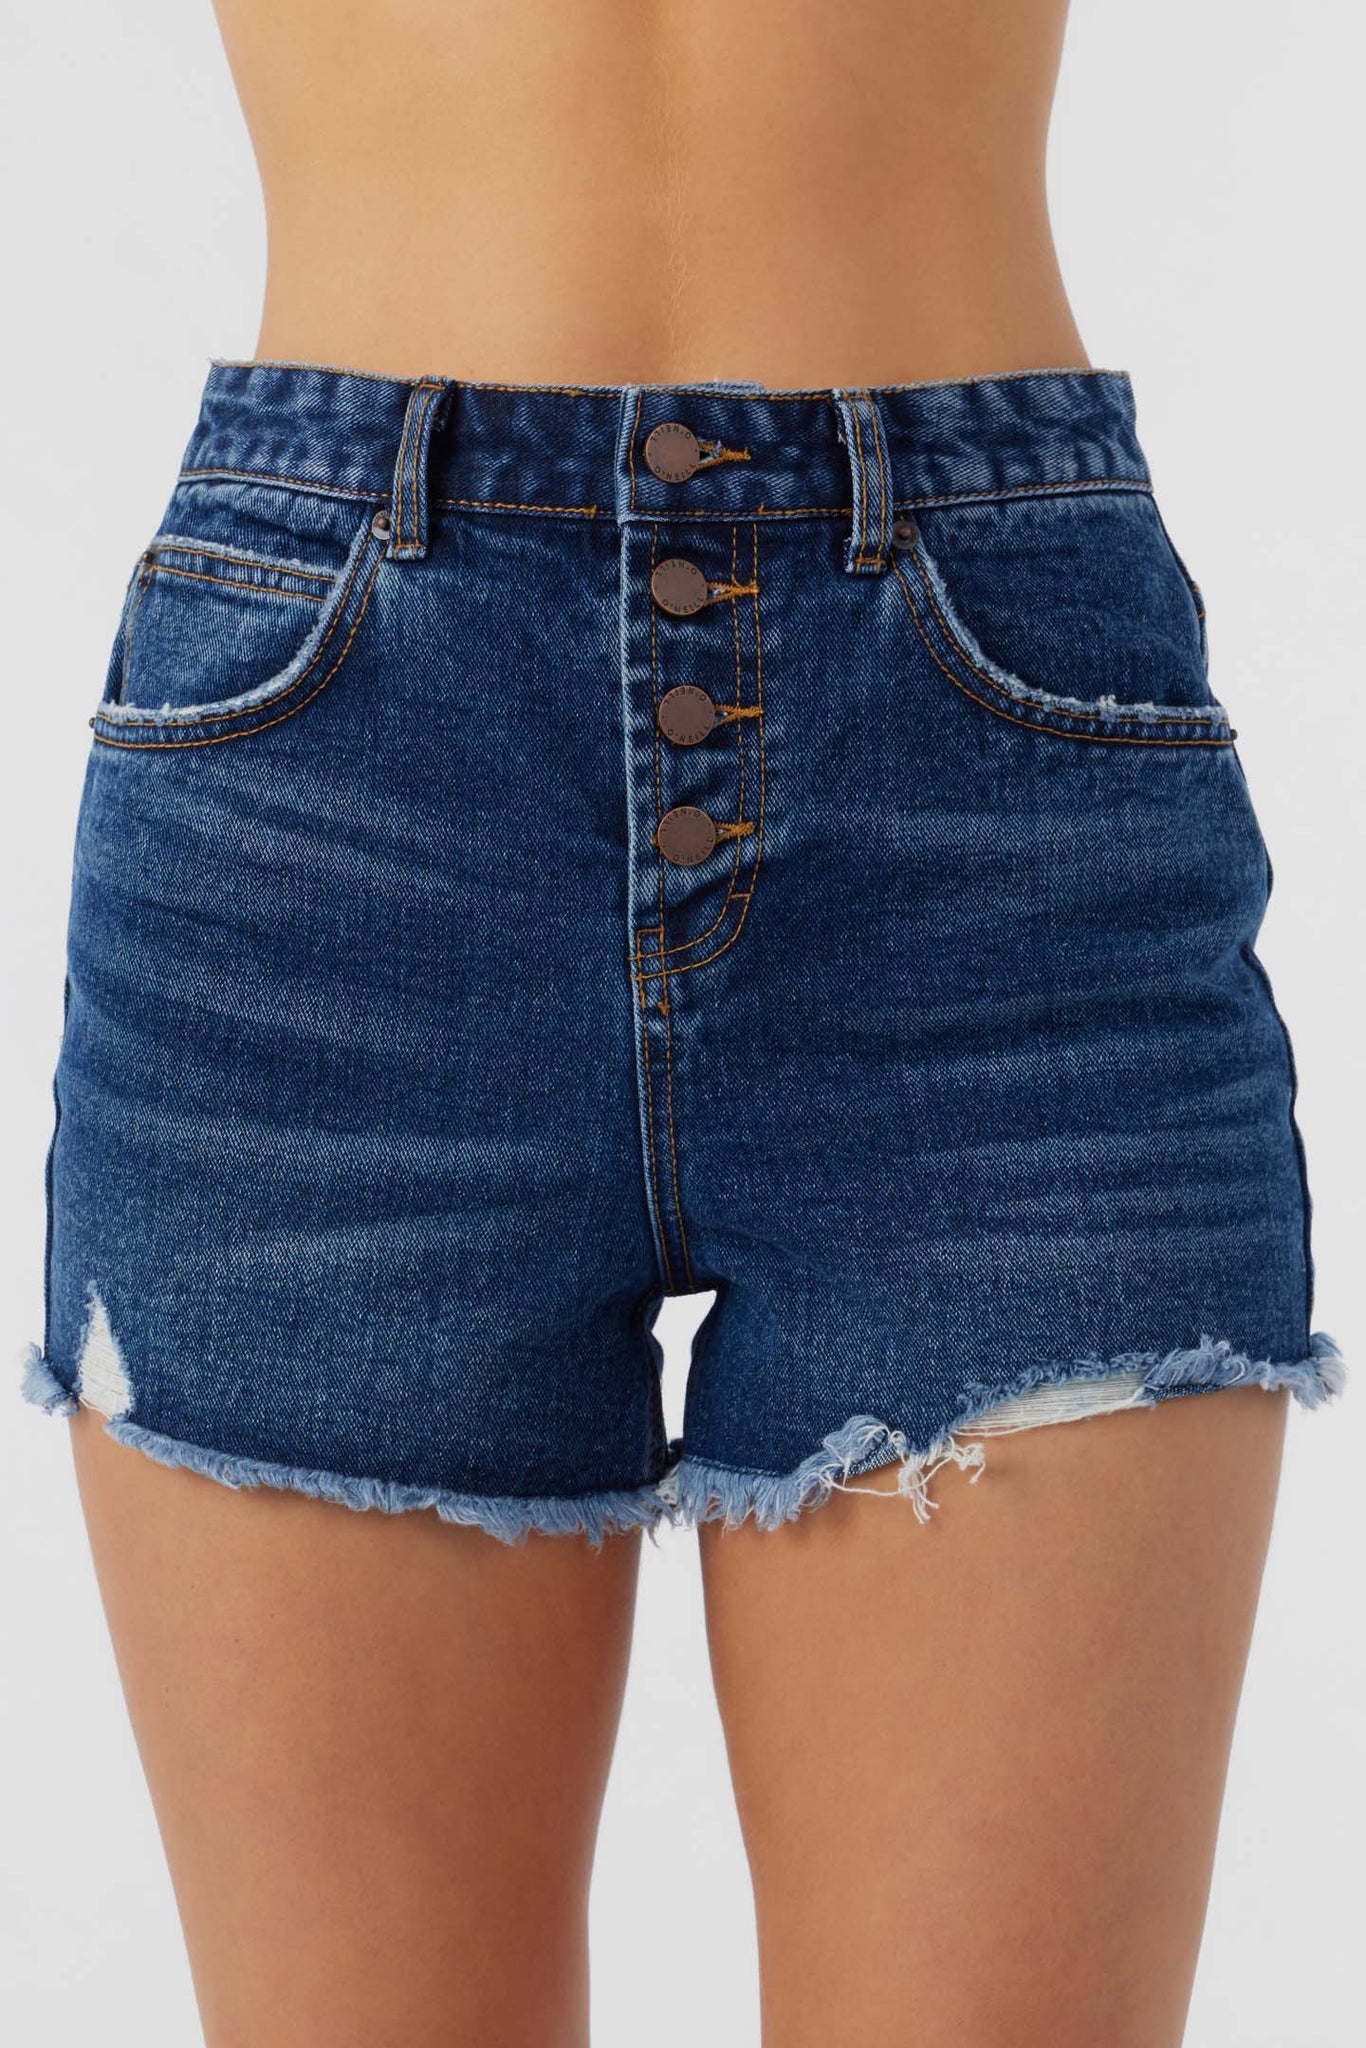 Samickarr Summer Savings Clearance!Denim Shorts For Women Mid Rise